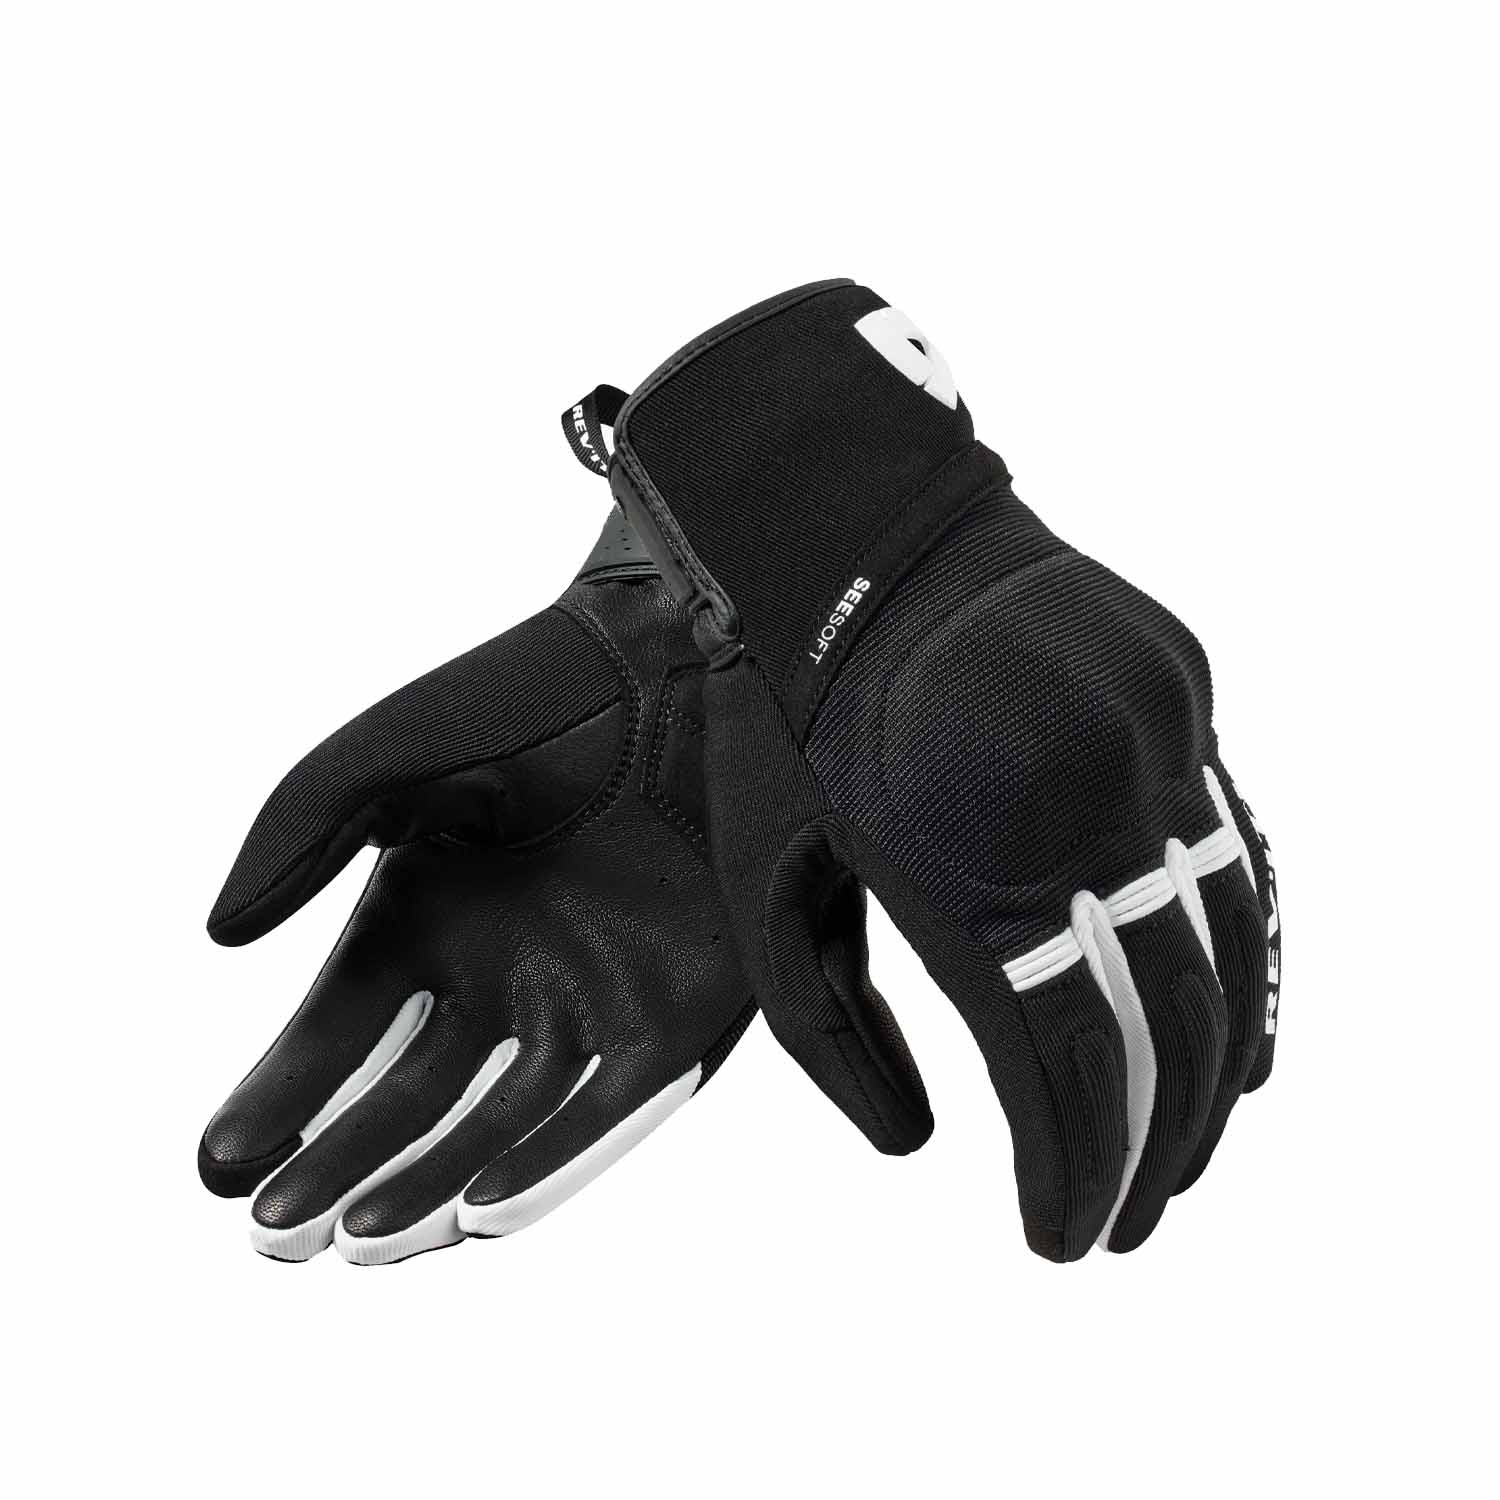 Image of EU REV'IT! Mosca 2 Gloves Black White Taille 2XL